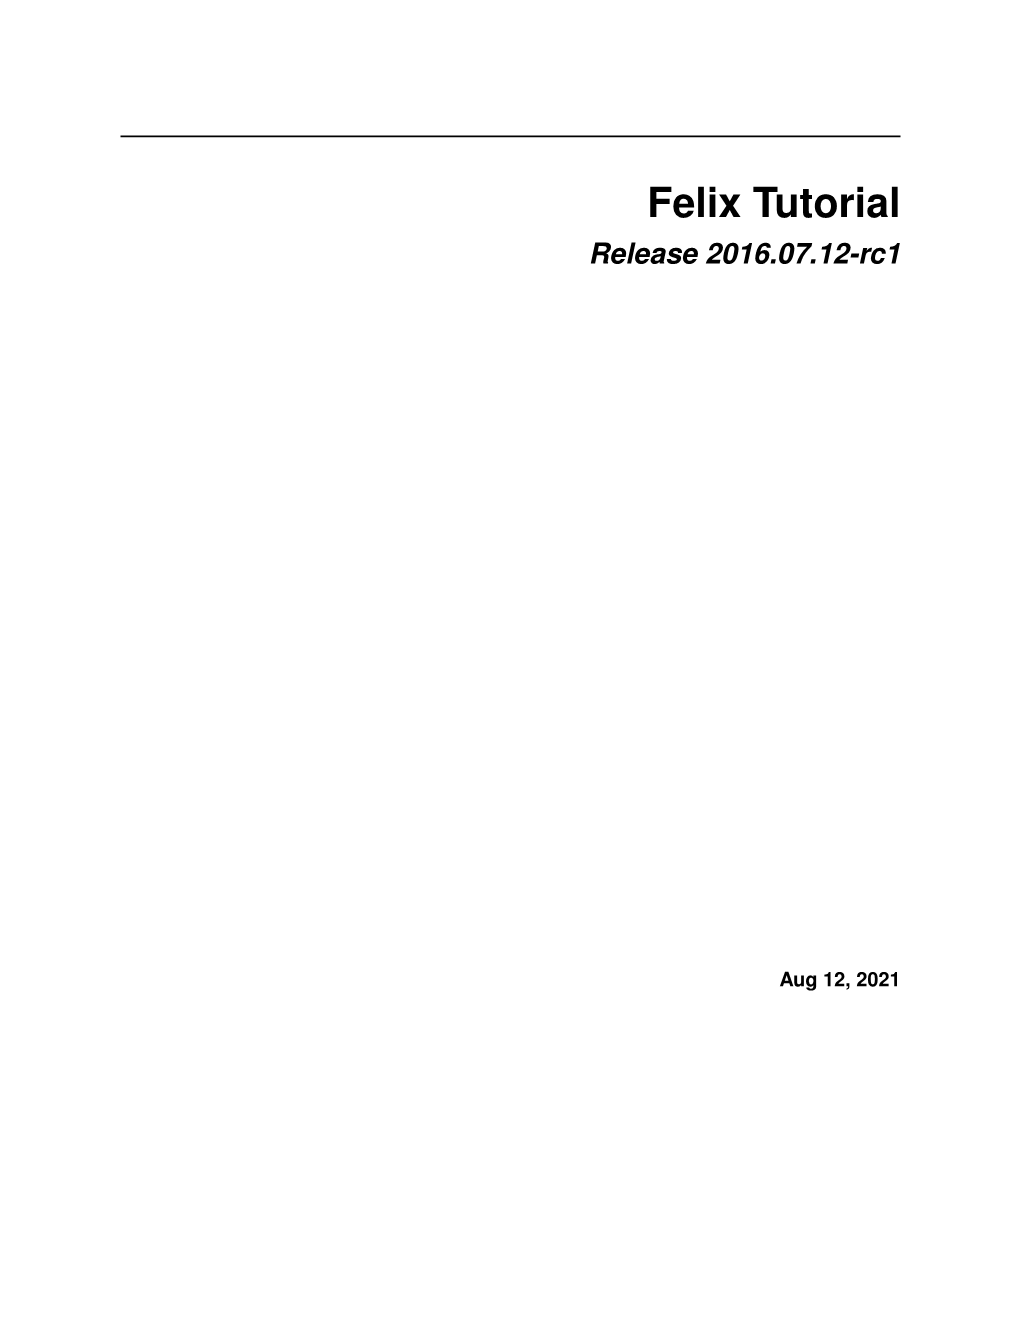 Felix Tutorial Release 2016.07.12-Rc1